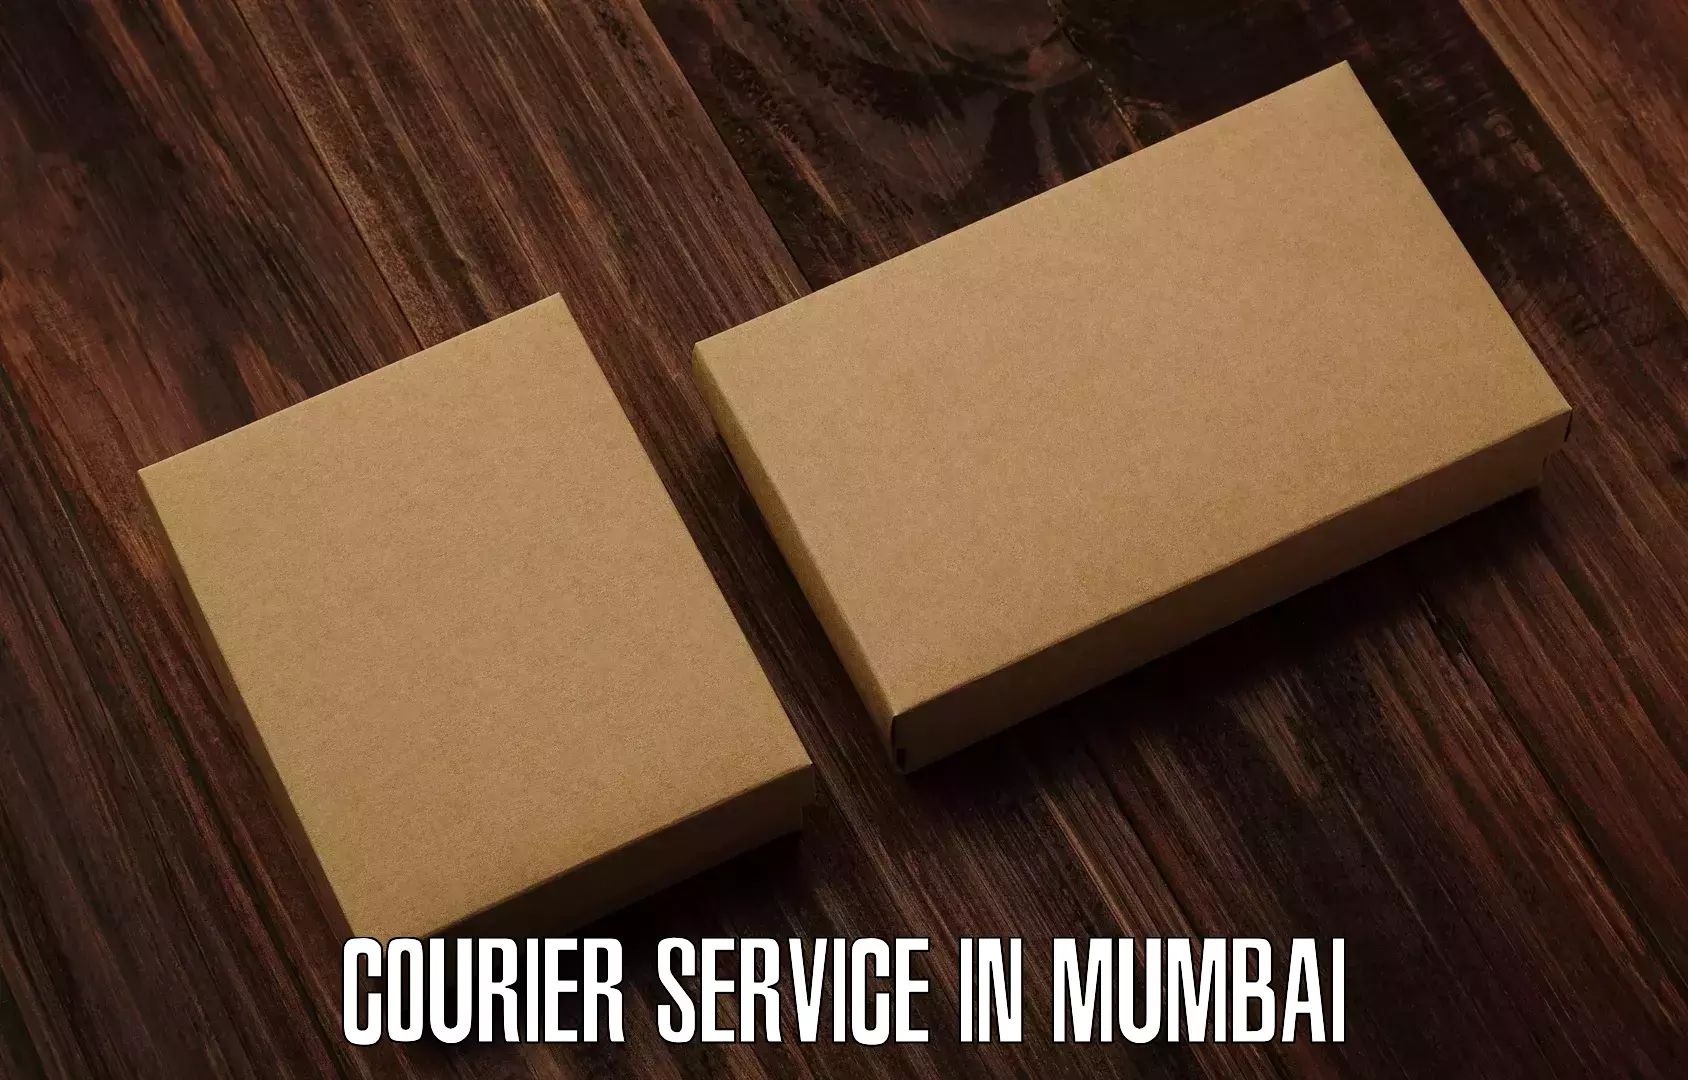 Expedited shipping methods in Mumbai